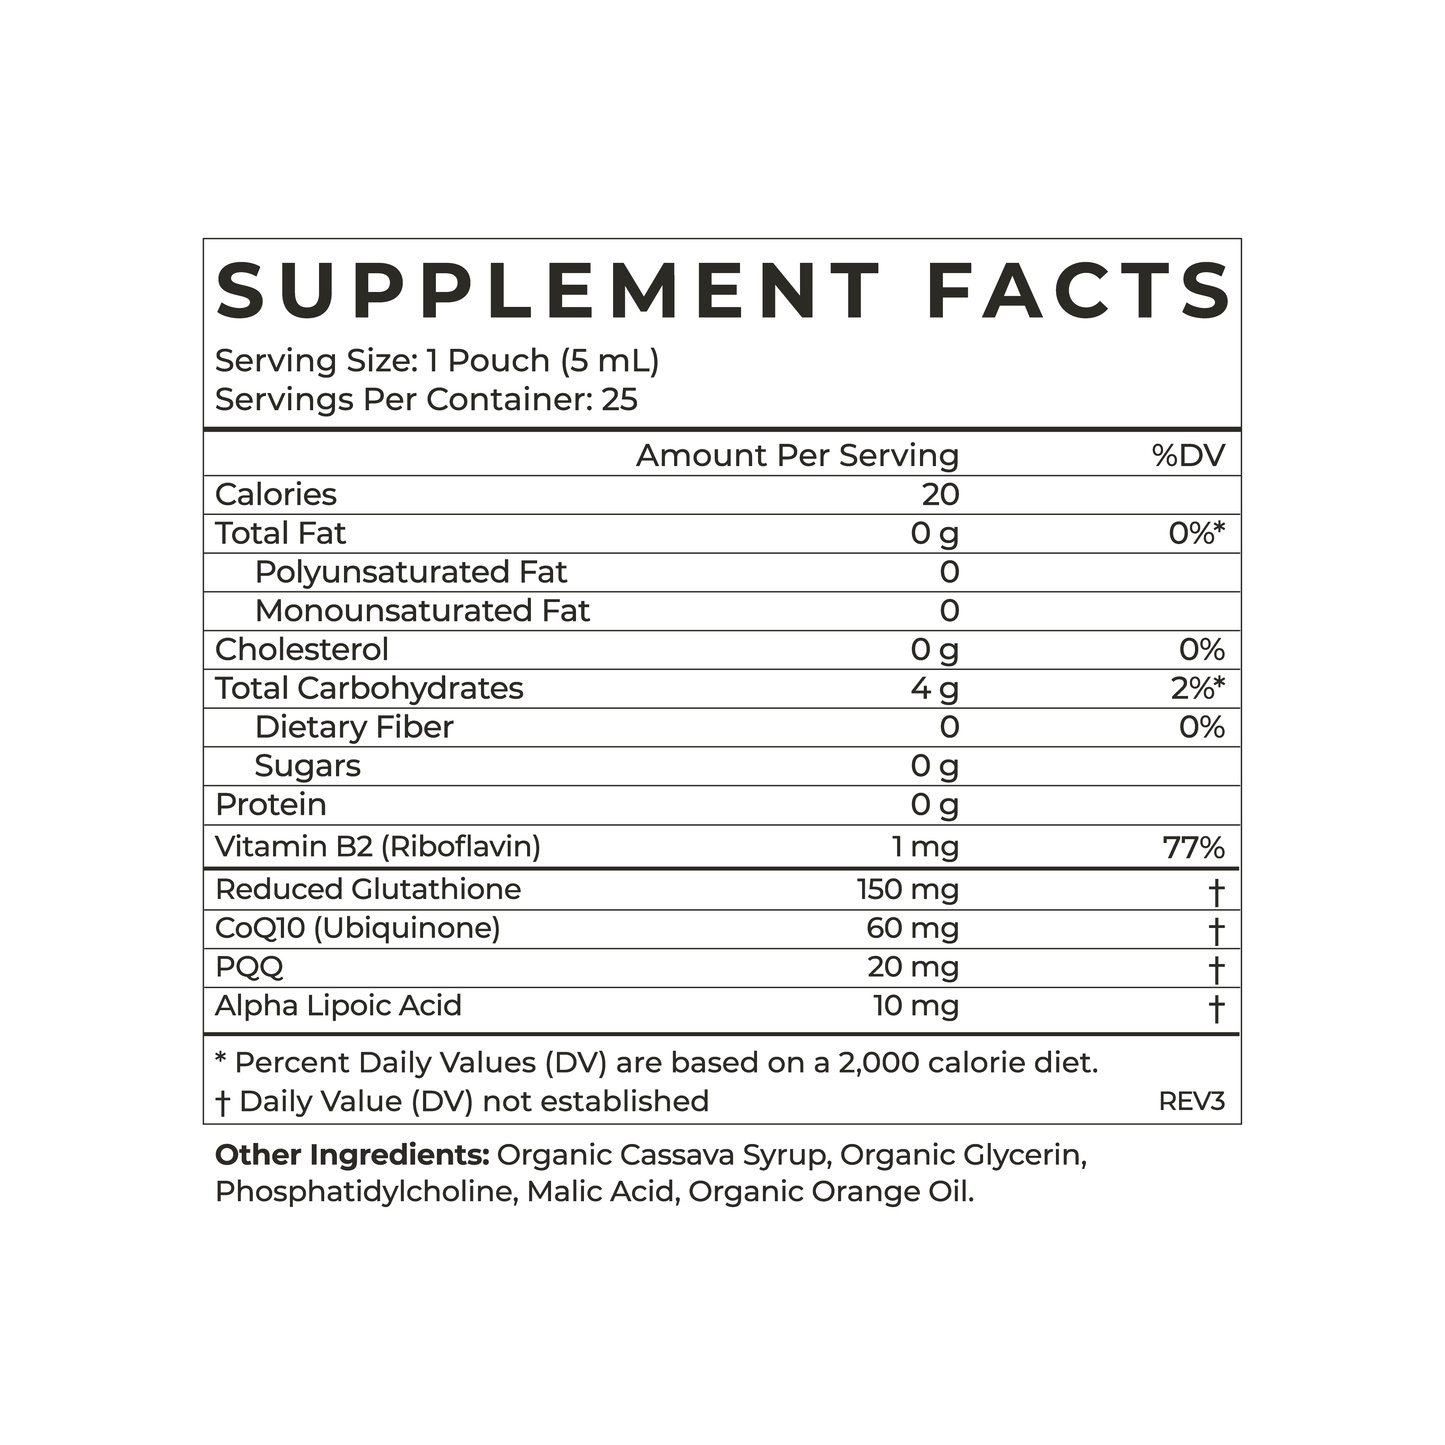 Liposomal Glutathione Supplement | CYMBIOTIKA - 25 pouches - Medaid - Lebanon